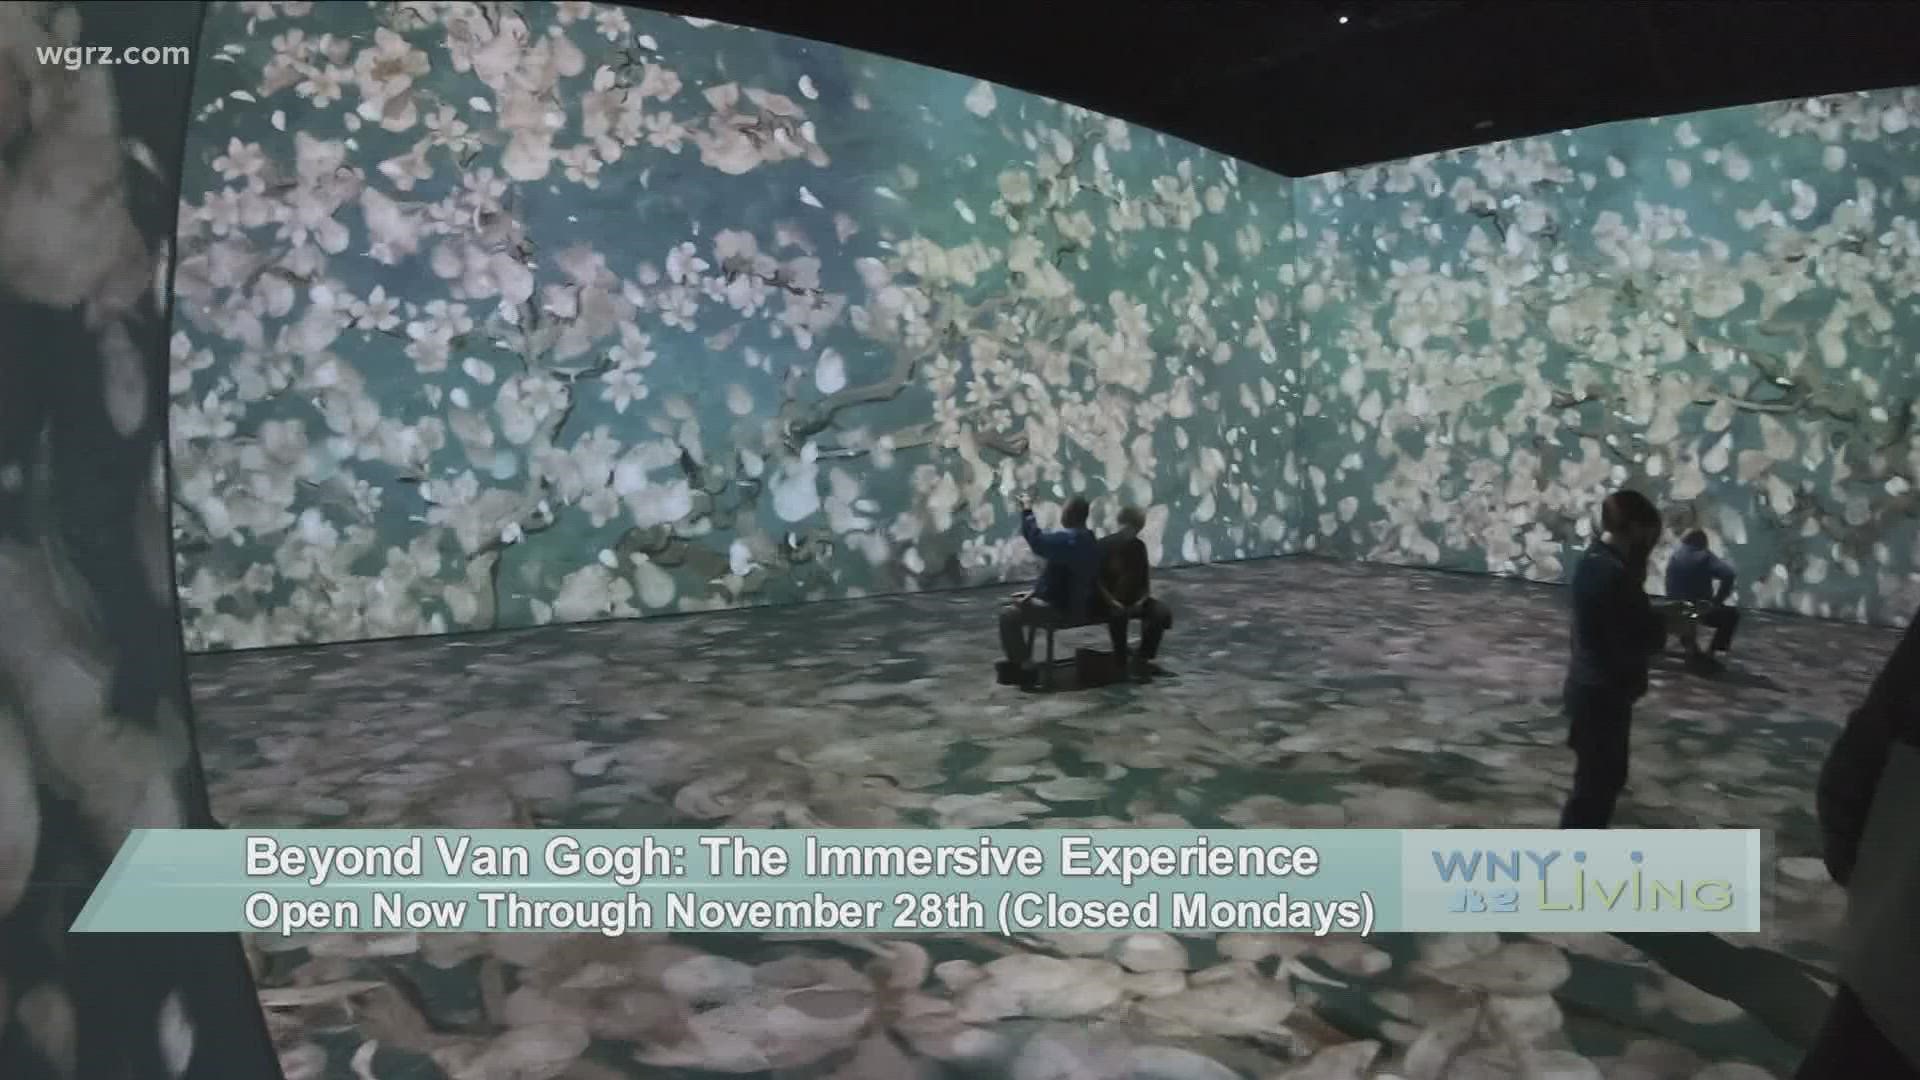 WNY Living - November 20 - Beyond Van Gogh: The Immersive Experience (THIS VIDEO IS SPONSORED BY BEYOND VAN GOGH)